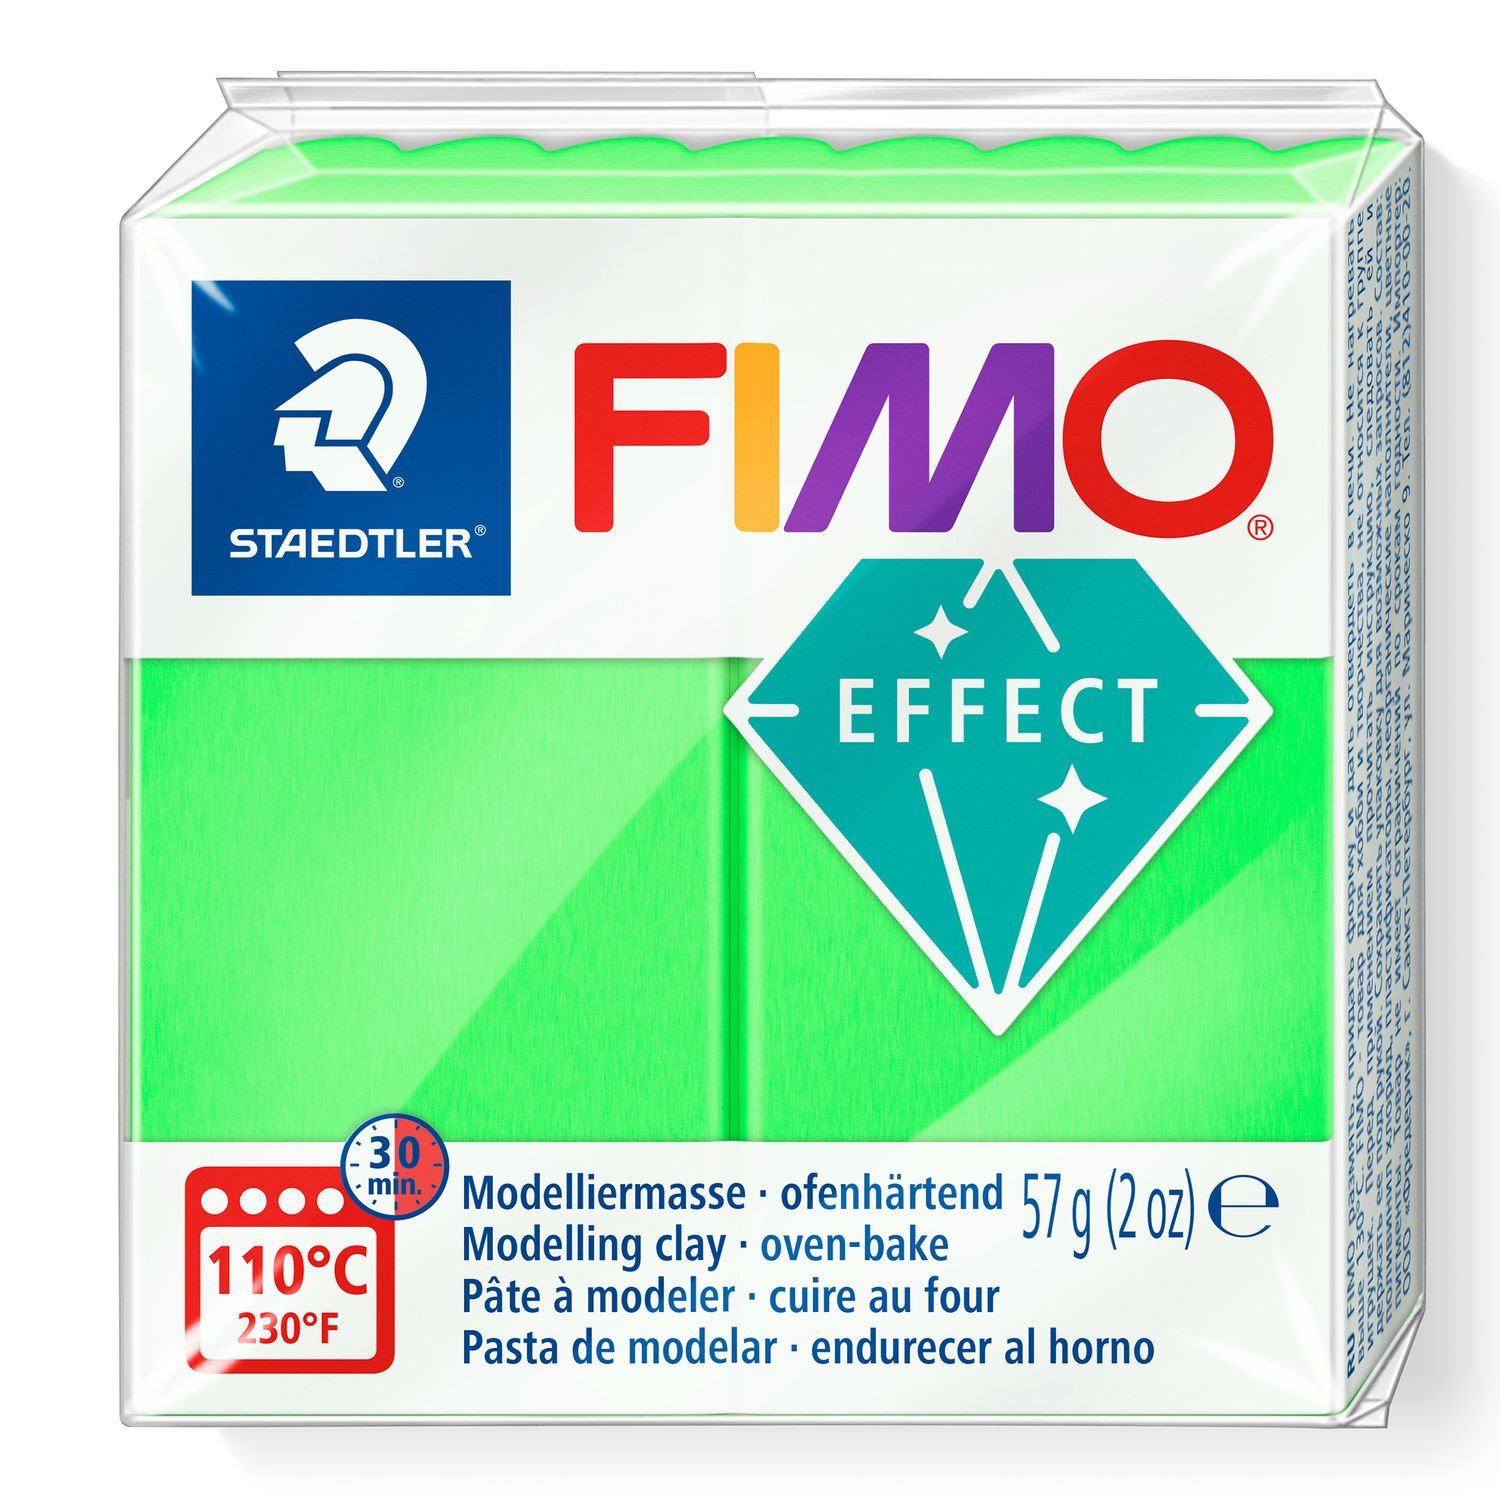 STAEDTLER FIMO 8010 - Knetmasse - Grün - Erwachsene - 1 Stück(e) - Neon green - 1 Farben